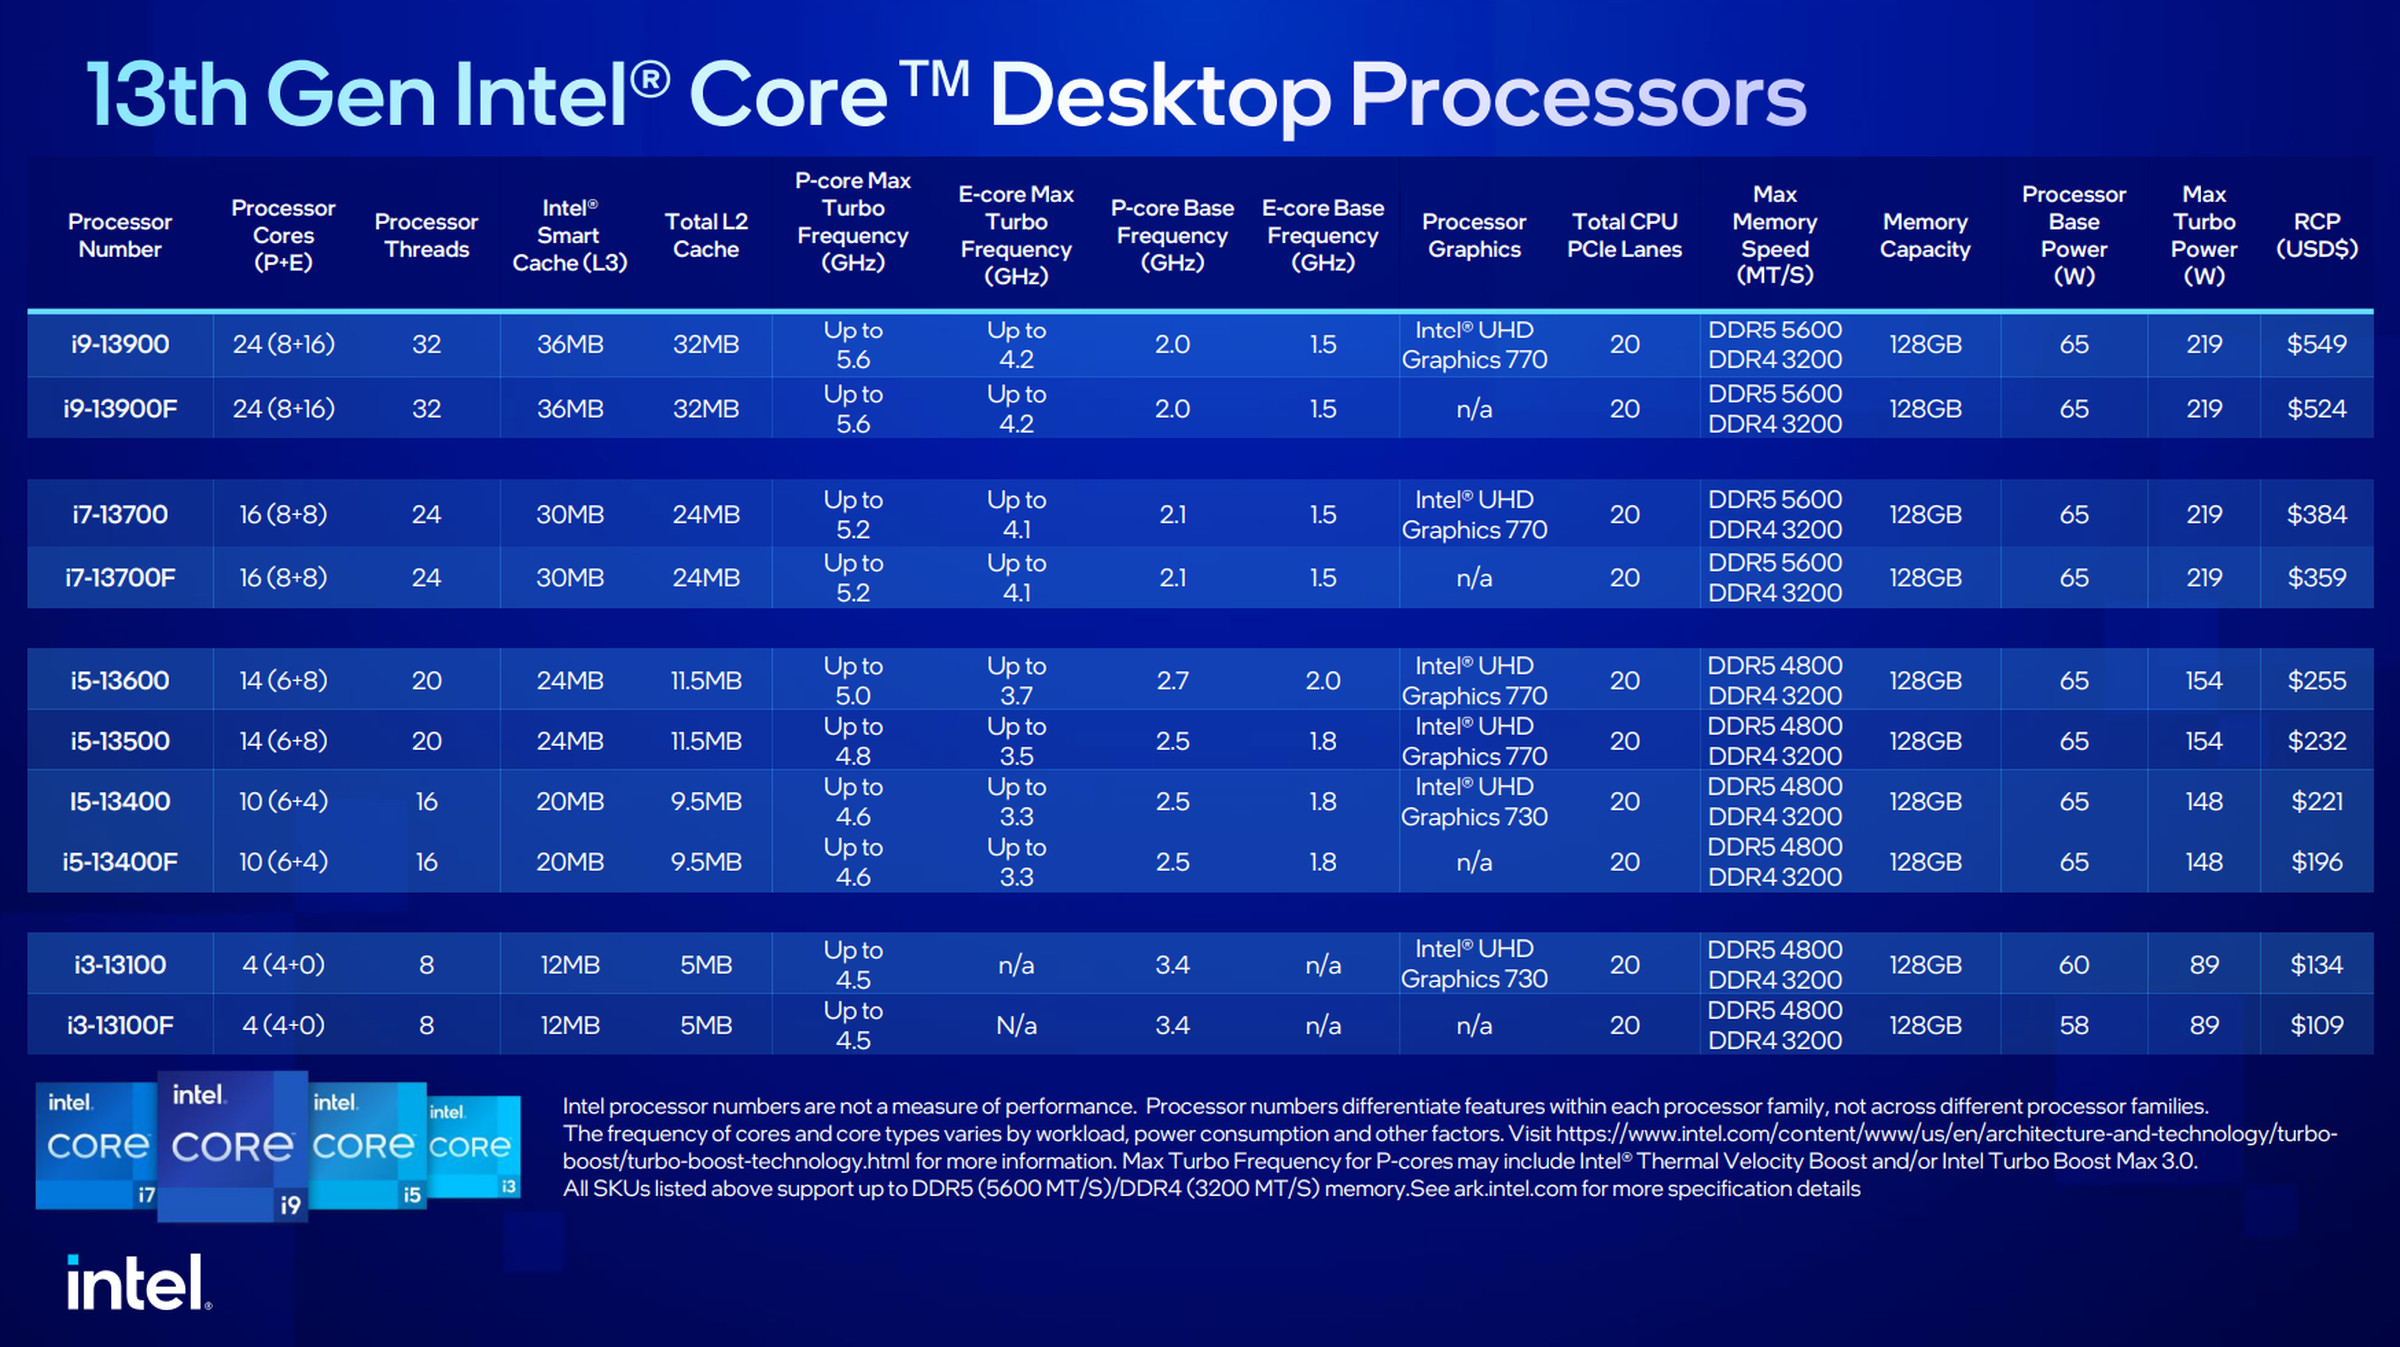 Intel’s new 13th Gen desktop processors.